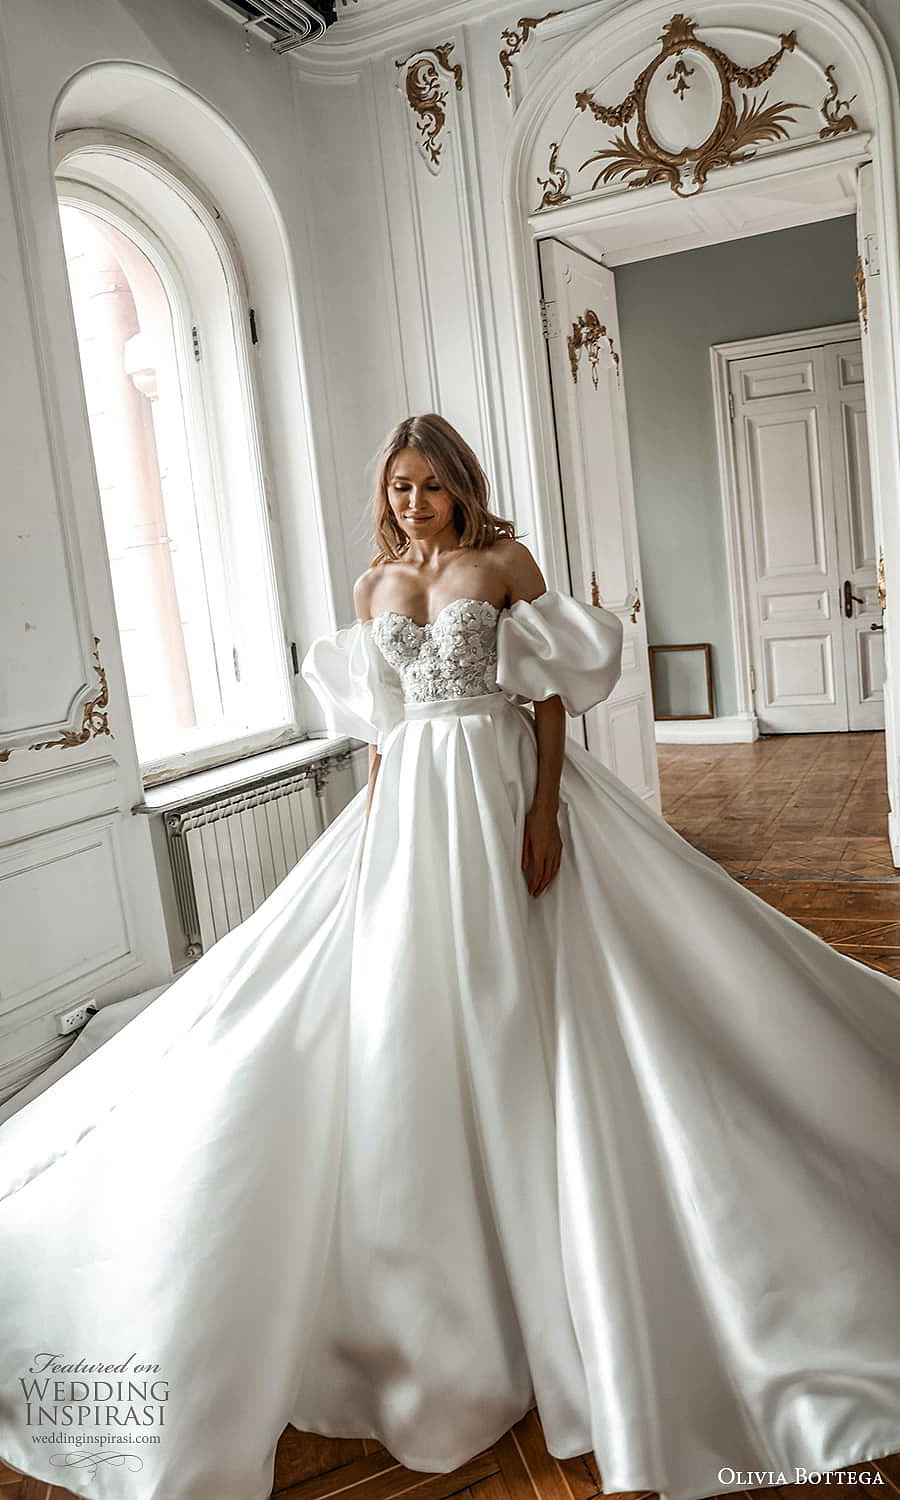 Olivia Bottega Pret-a-Porter 新娘系列 优雅百搭新娘嫁衣 - 23